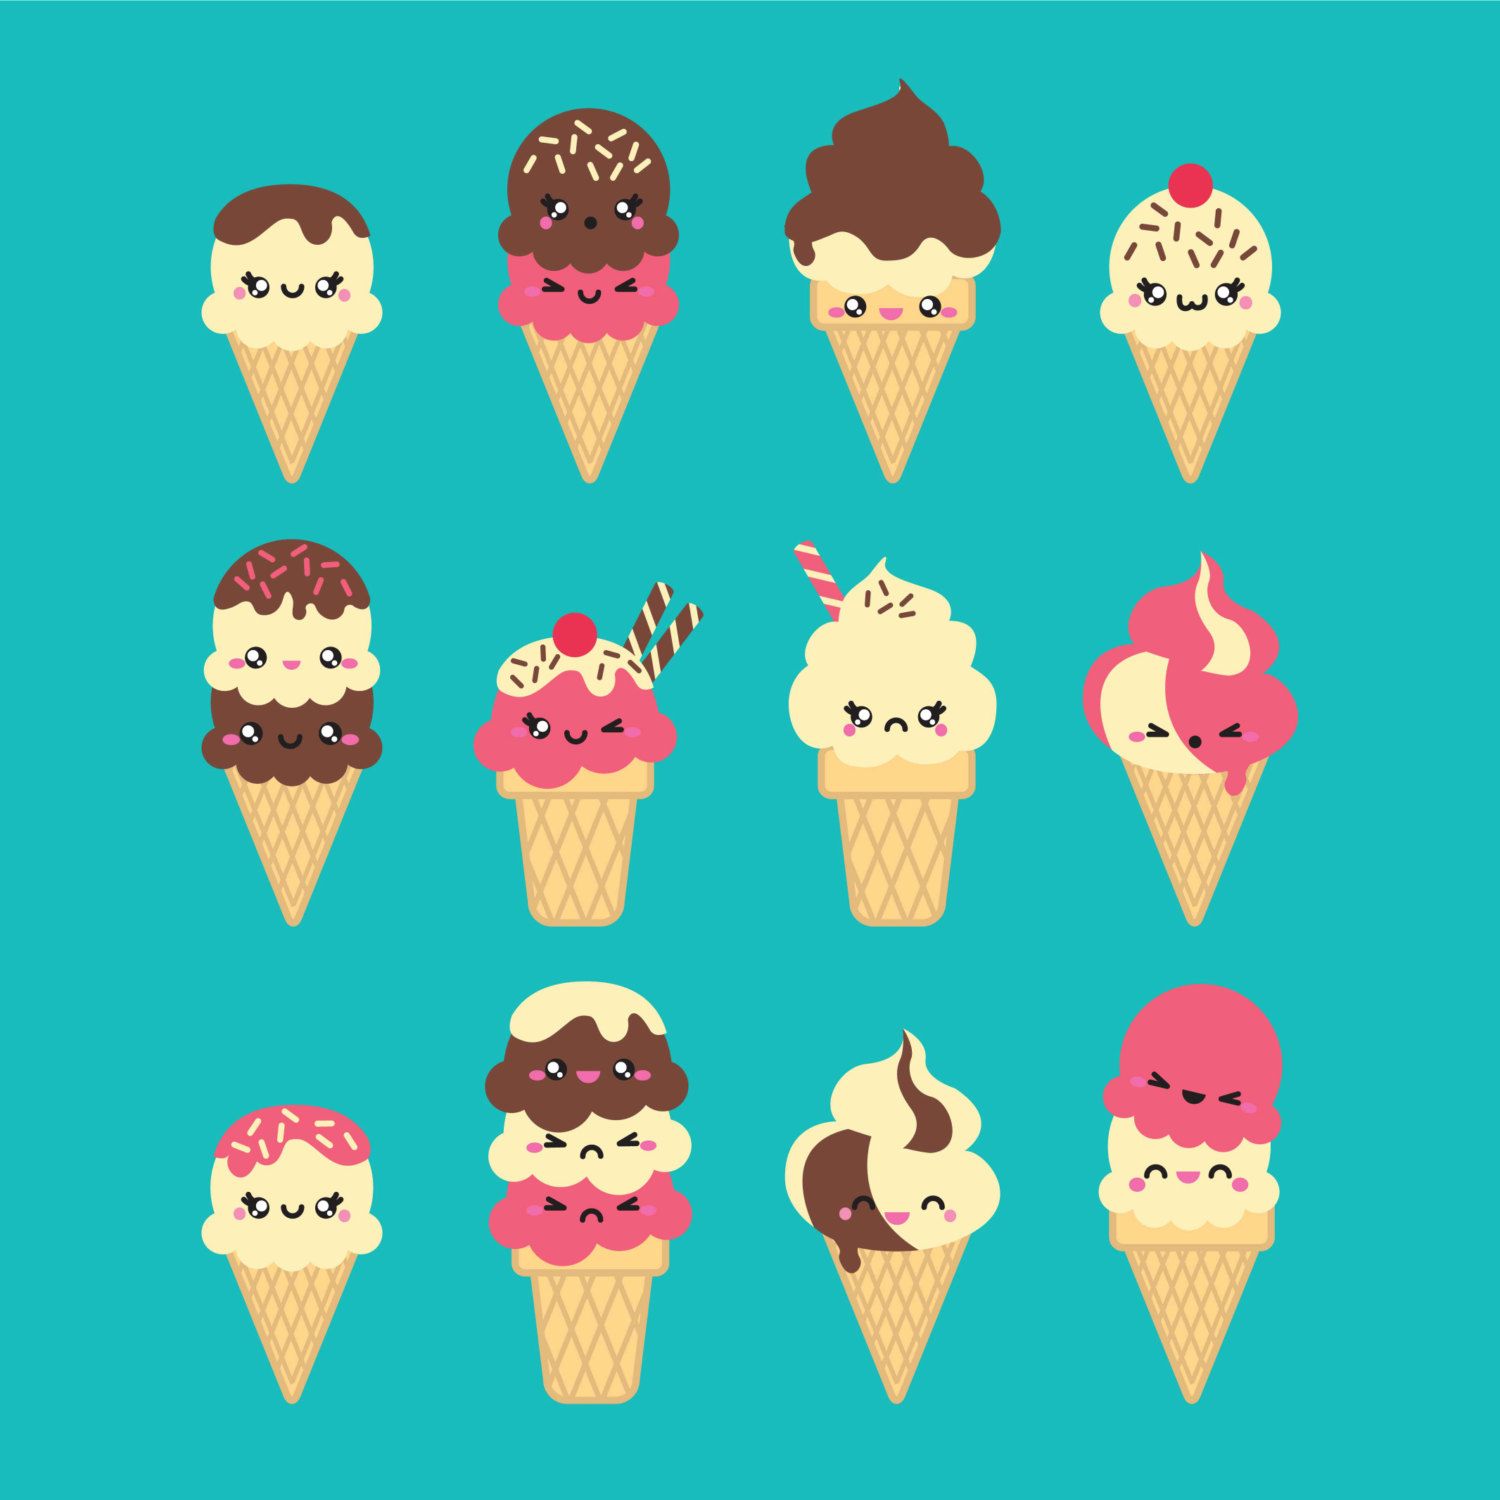 gelato clipart illustration